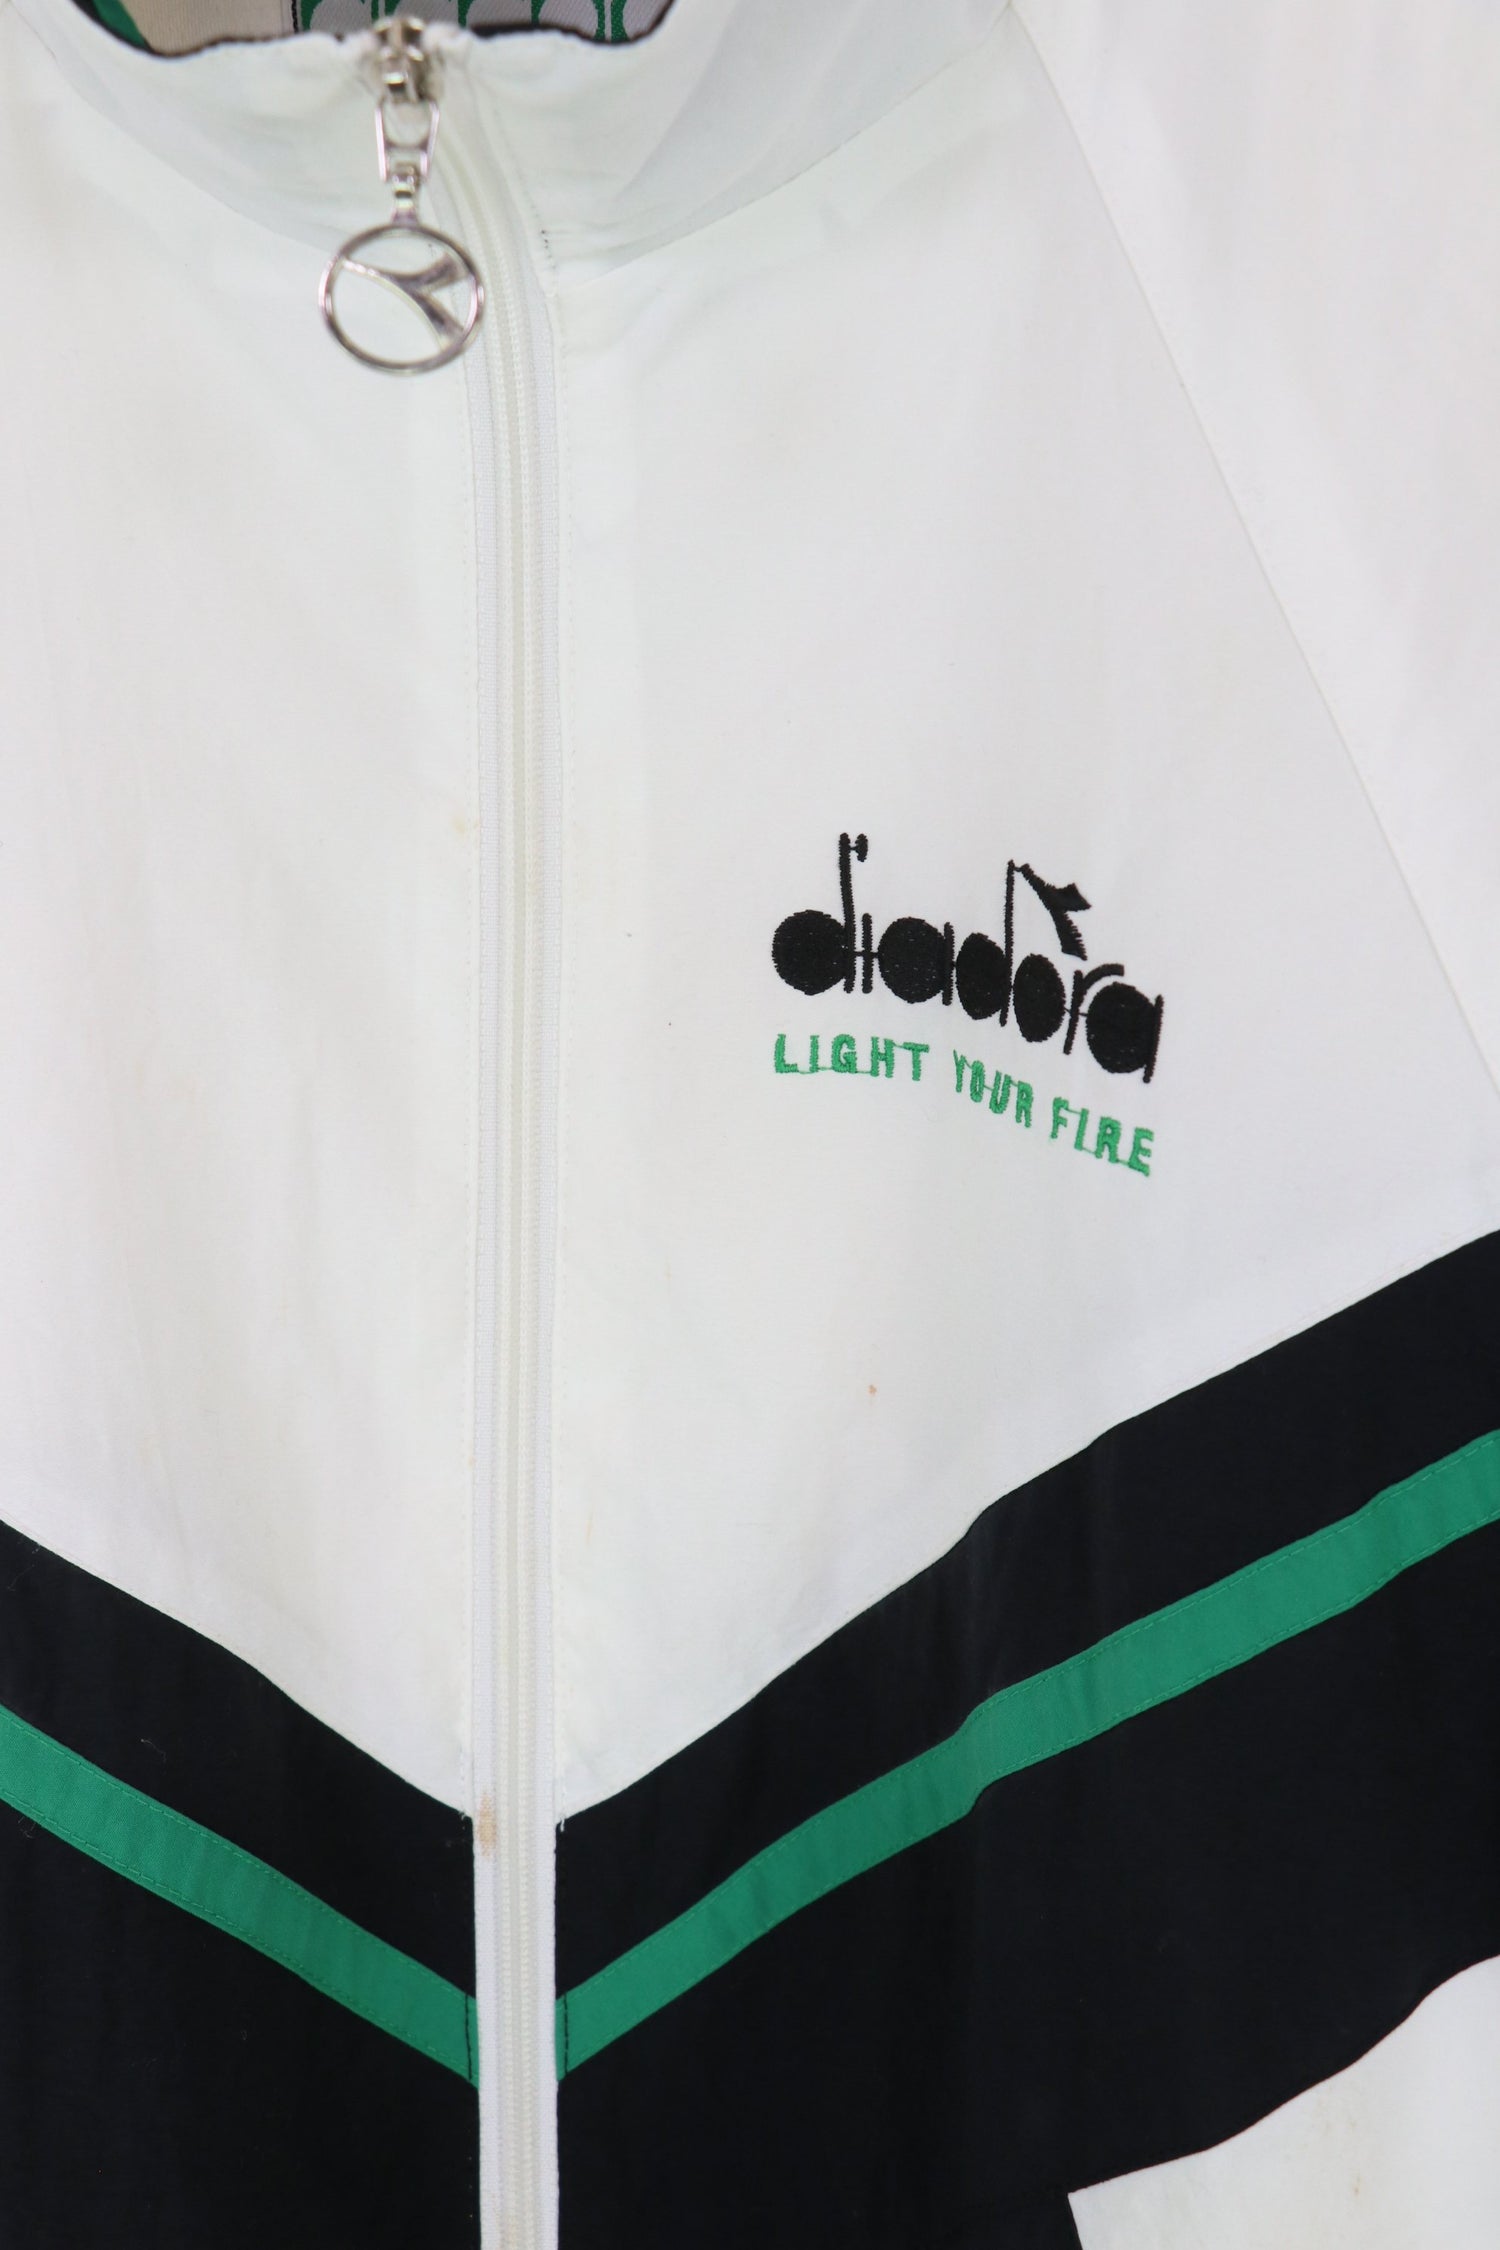 Diadora Shell Suit Jacket White/Black XL